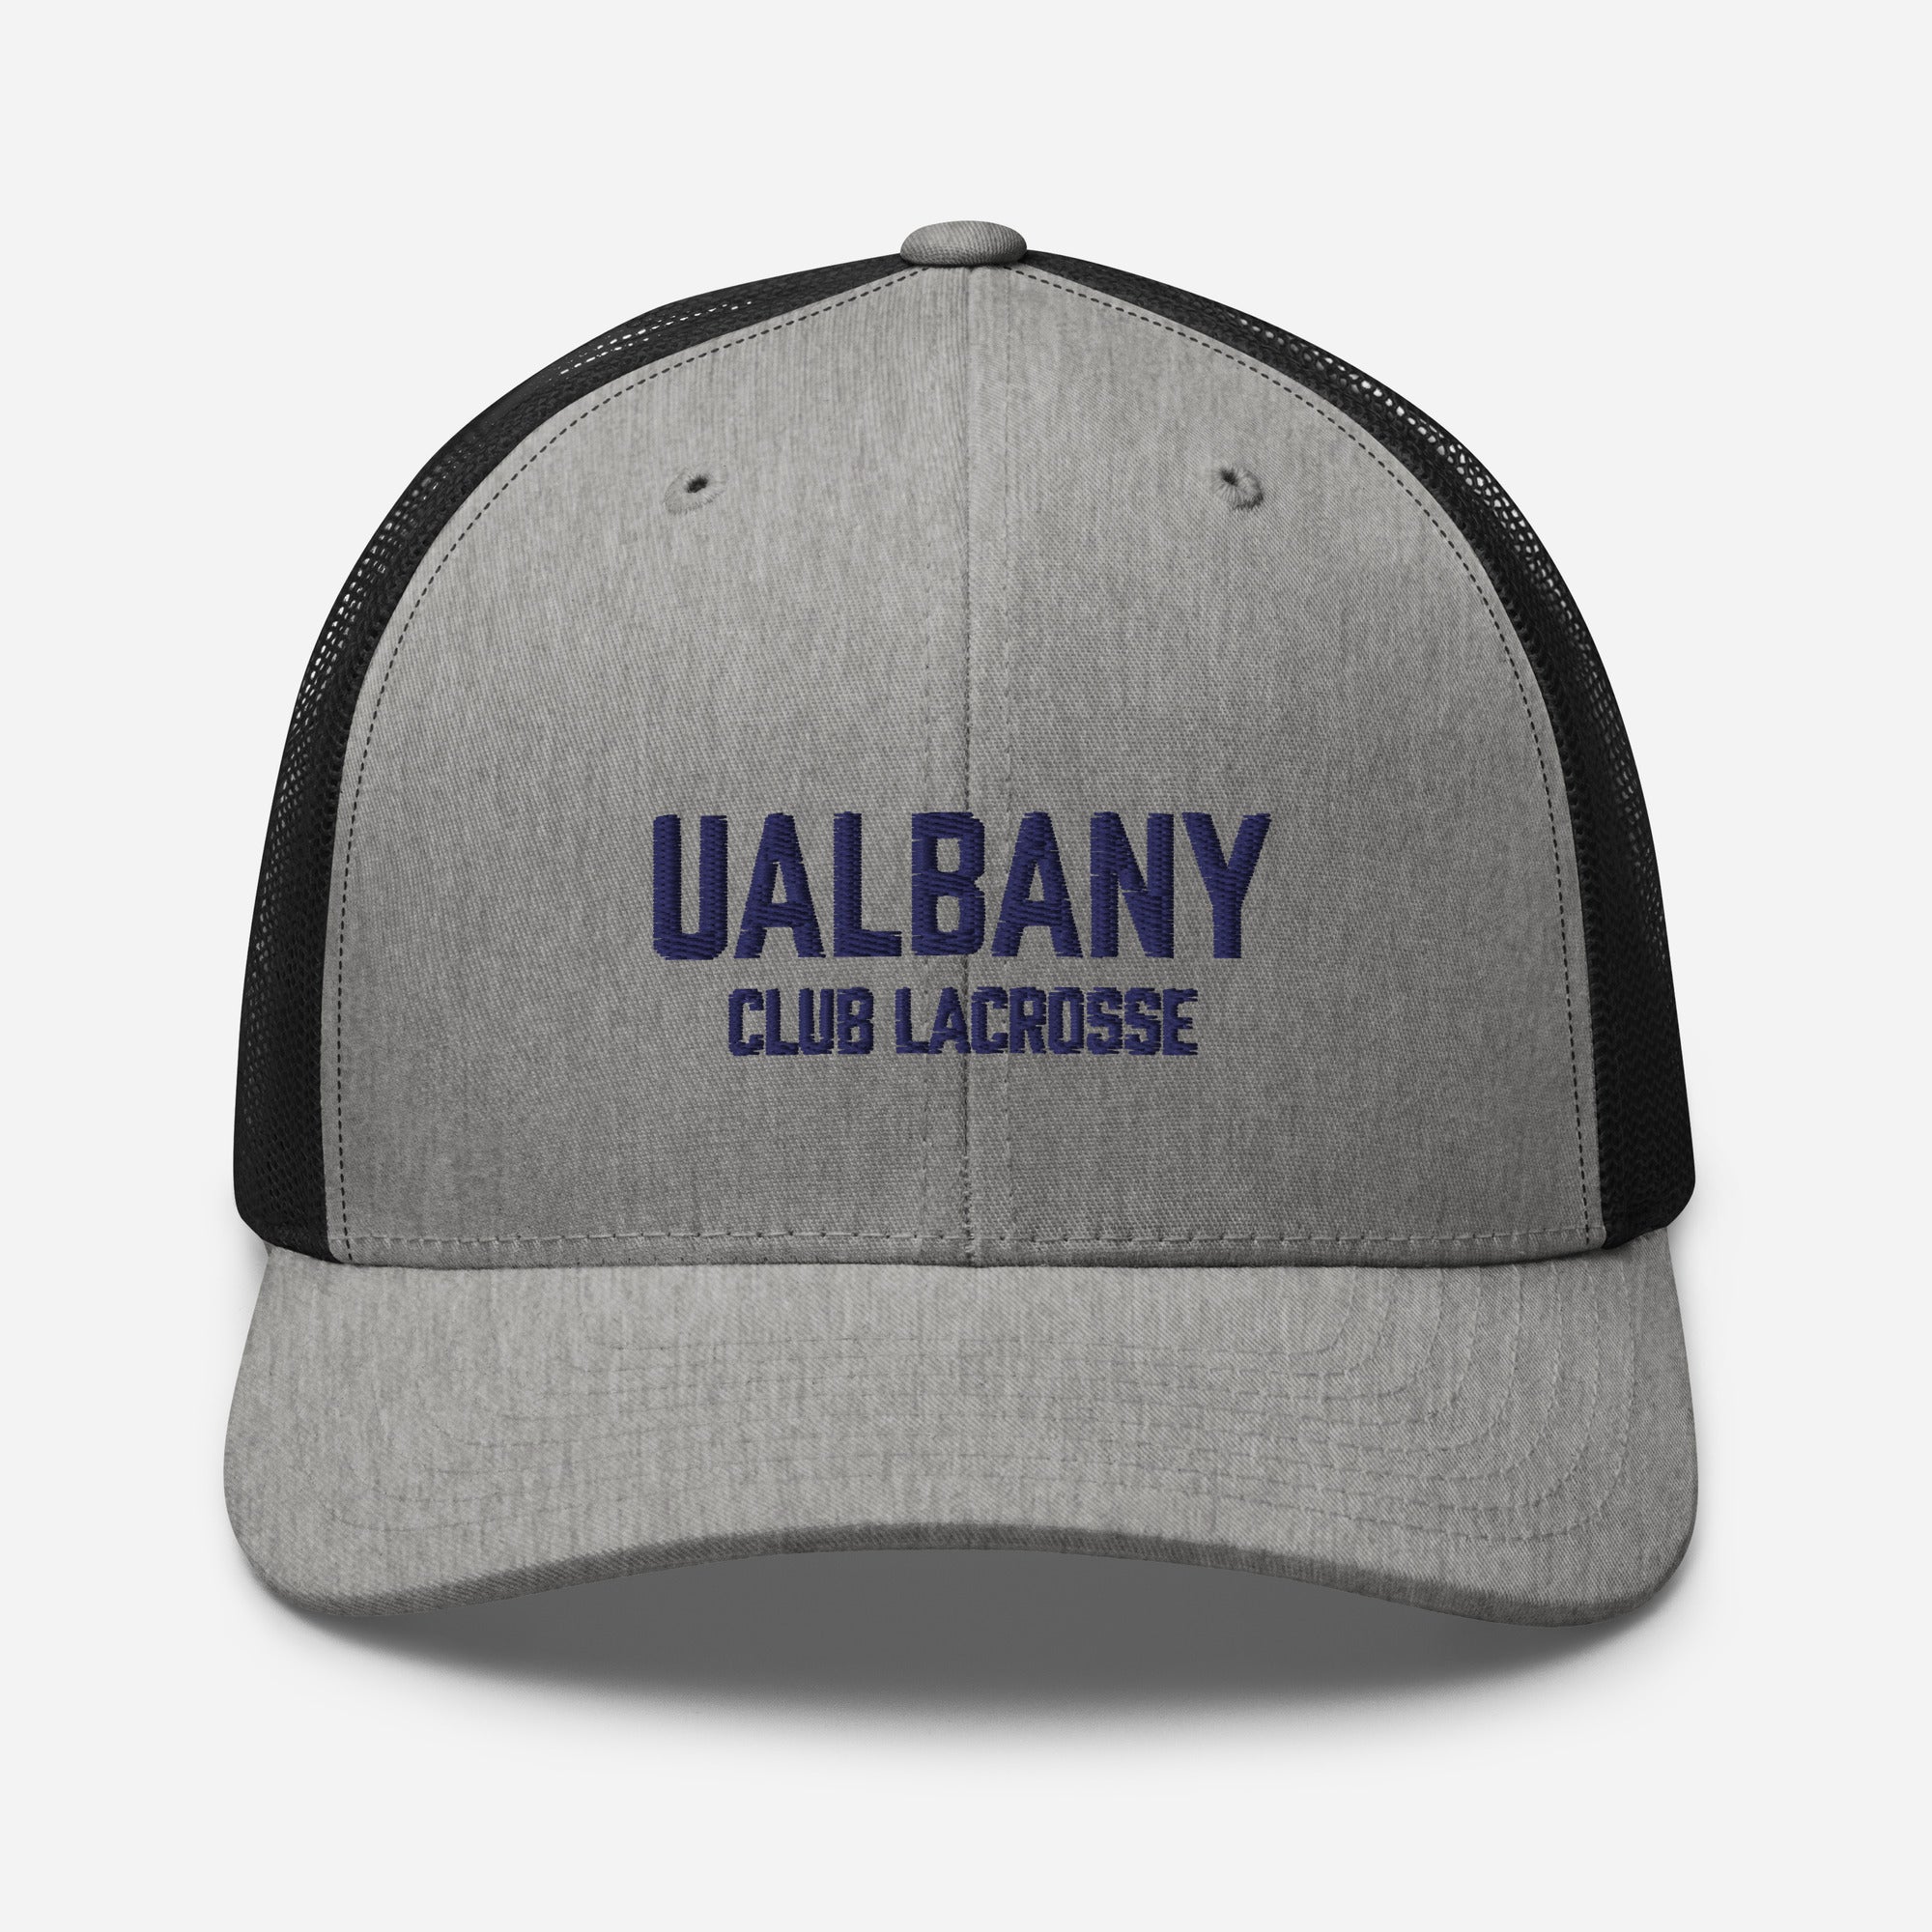 UAlbany Trucker Cap